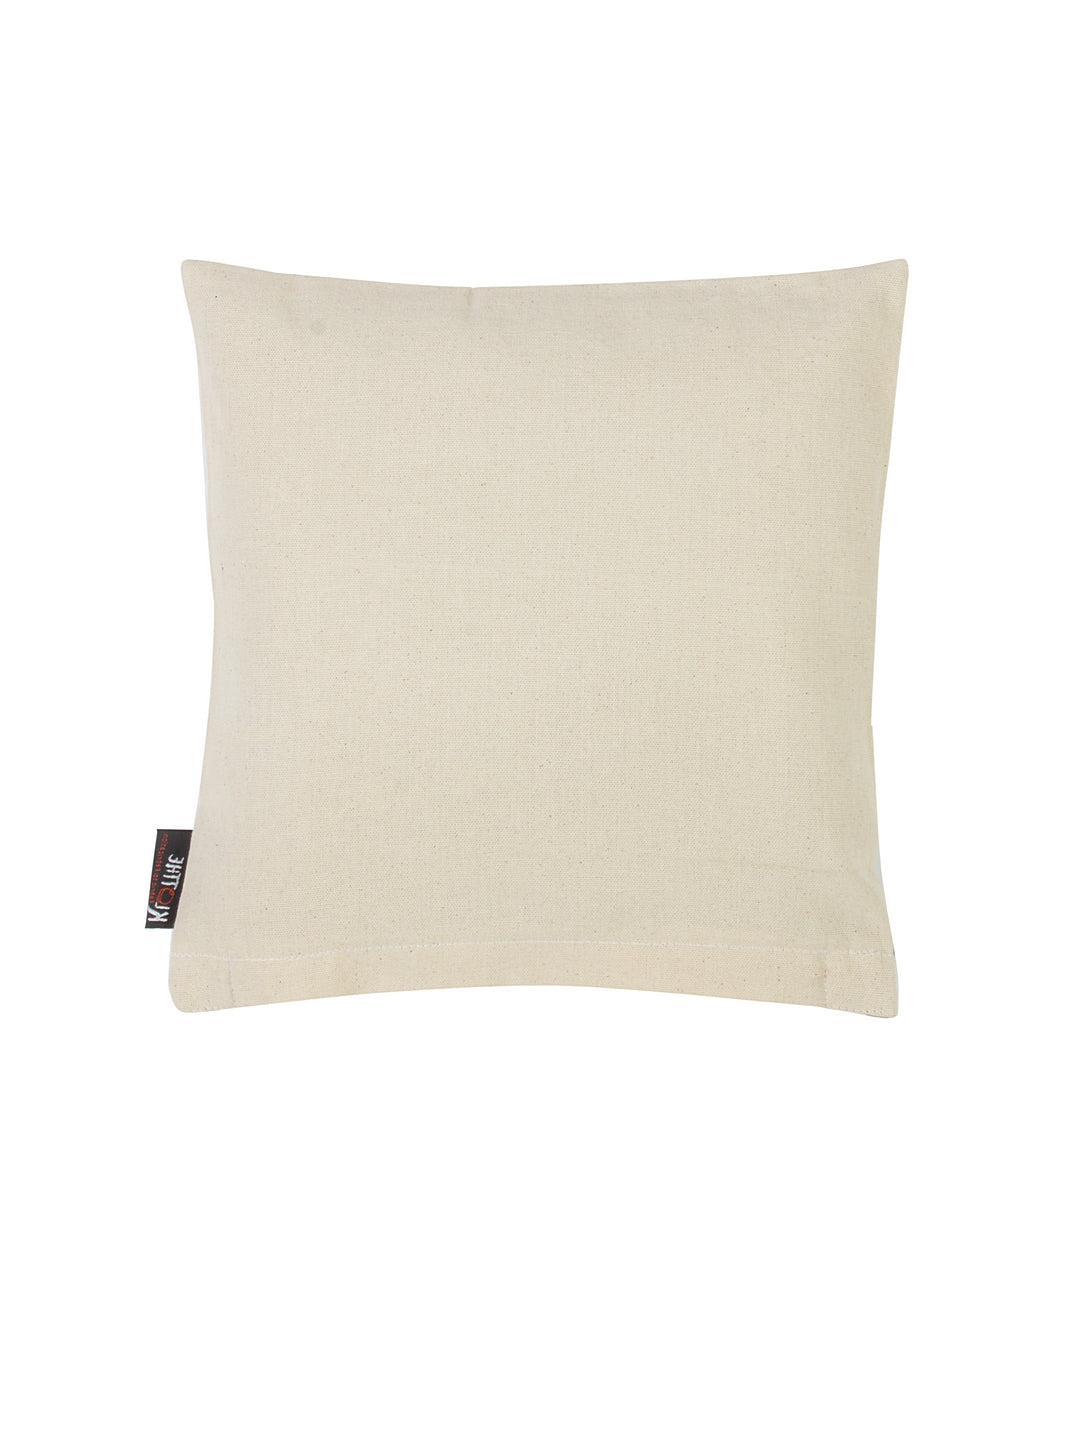 Klotthe OffWhite Cotton Embellished Set of 5 Cushion Cover (30X30 cm)